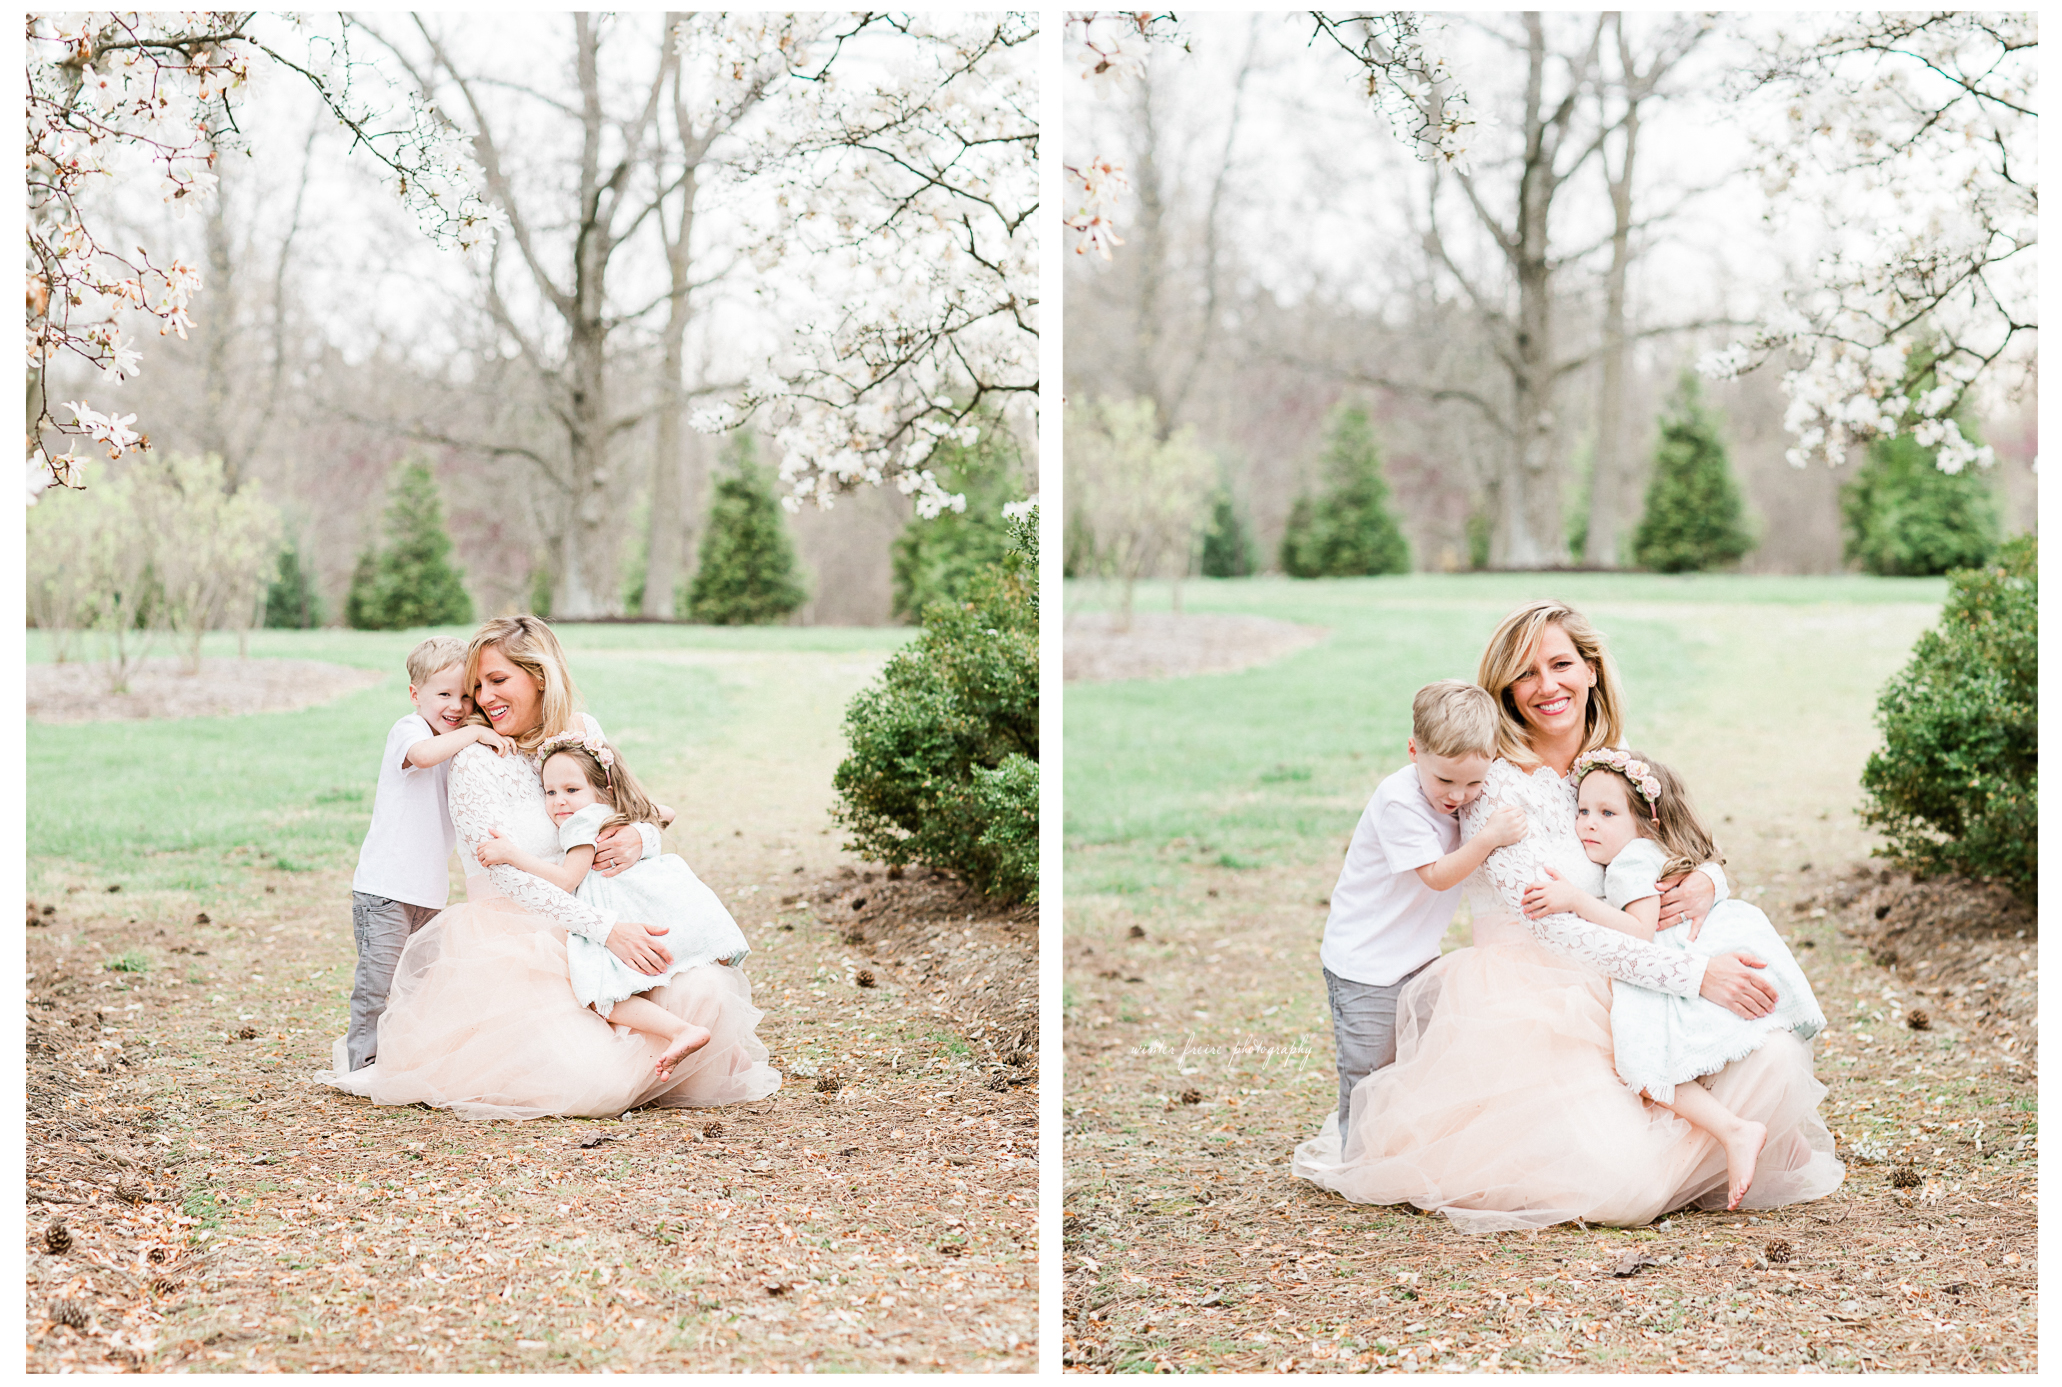 Winter Freire Photography | Elegant Timeless Organic Portraits | Dayton, Ohio Motherhood Photography | Motherhood | Mother's Day 2018 | Fine Art Photographer Dayton, Ohio